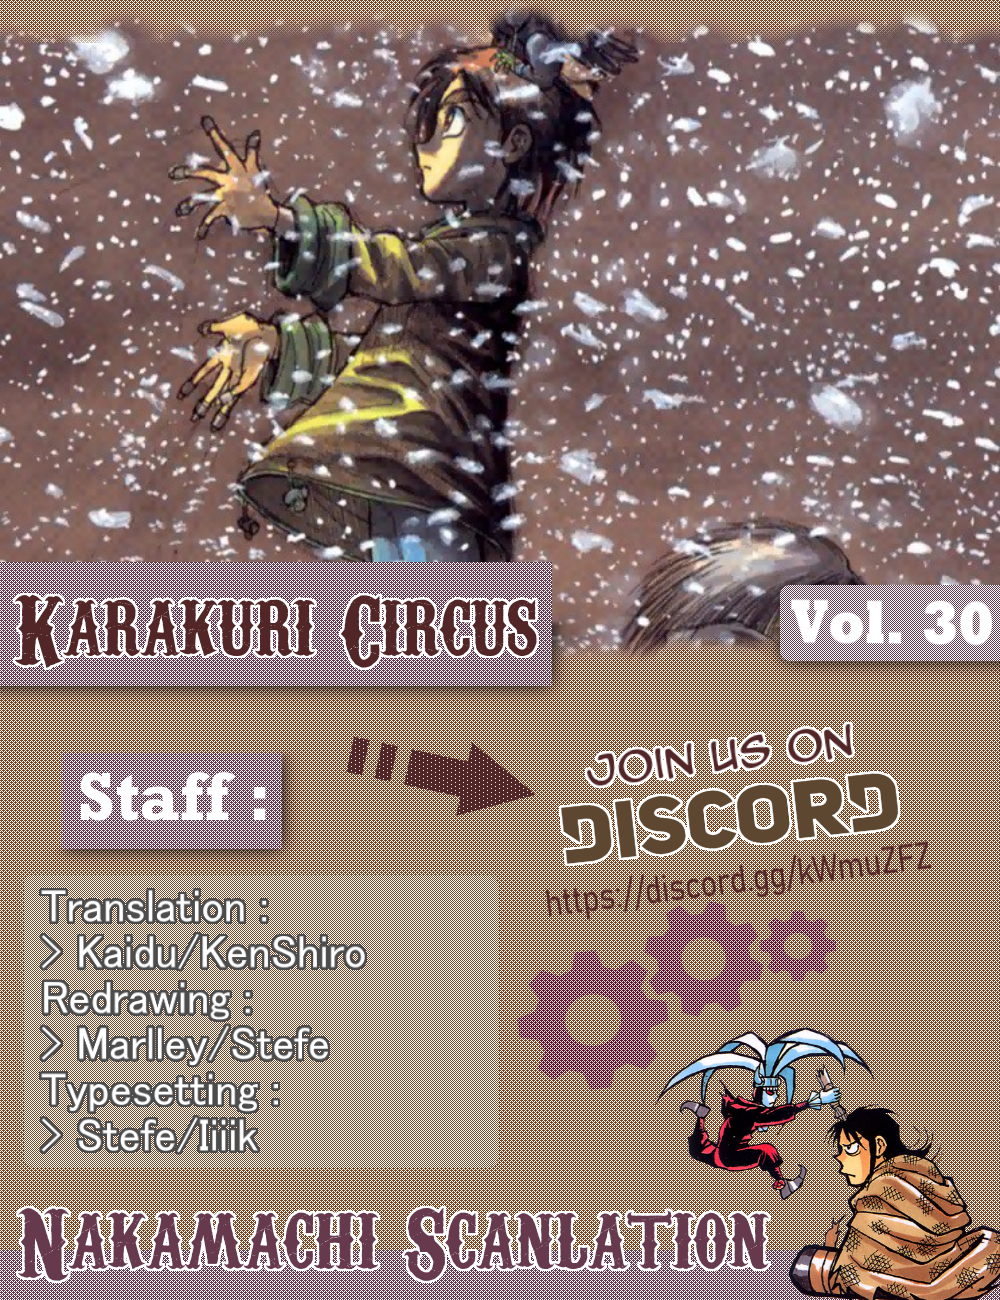 Karakuri Circus Chapter 295: Main Part - Welcome To The Kuroga Village - Act 13: Begin! - Picture 1